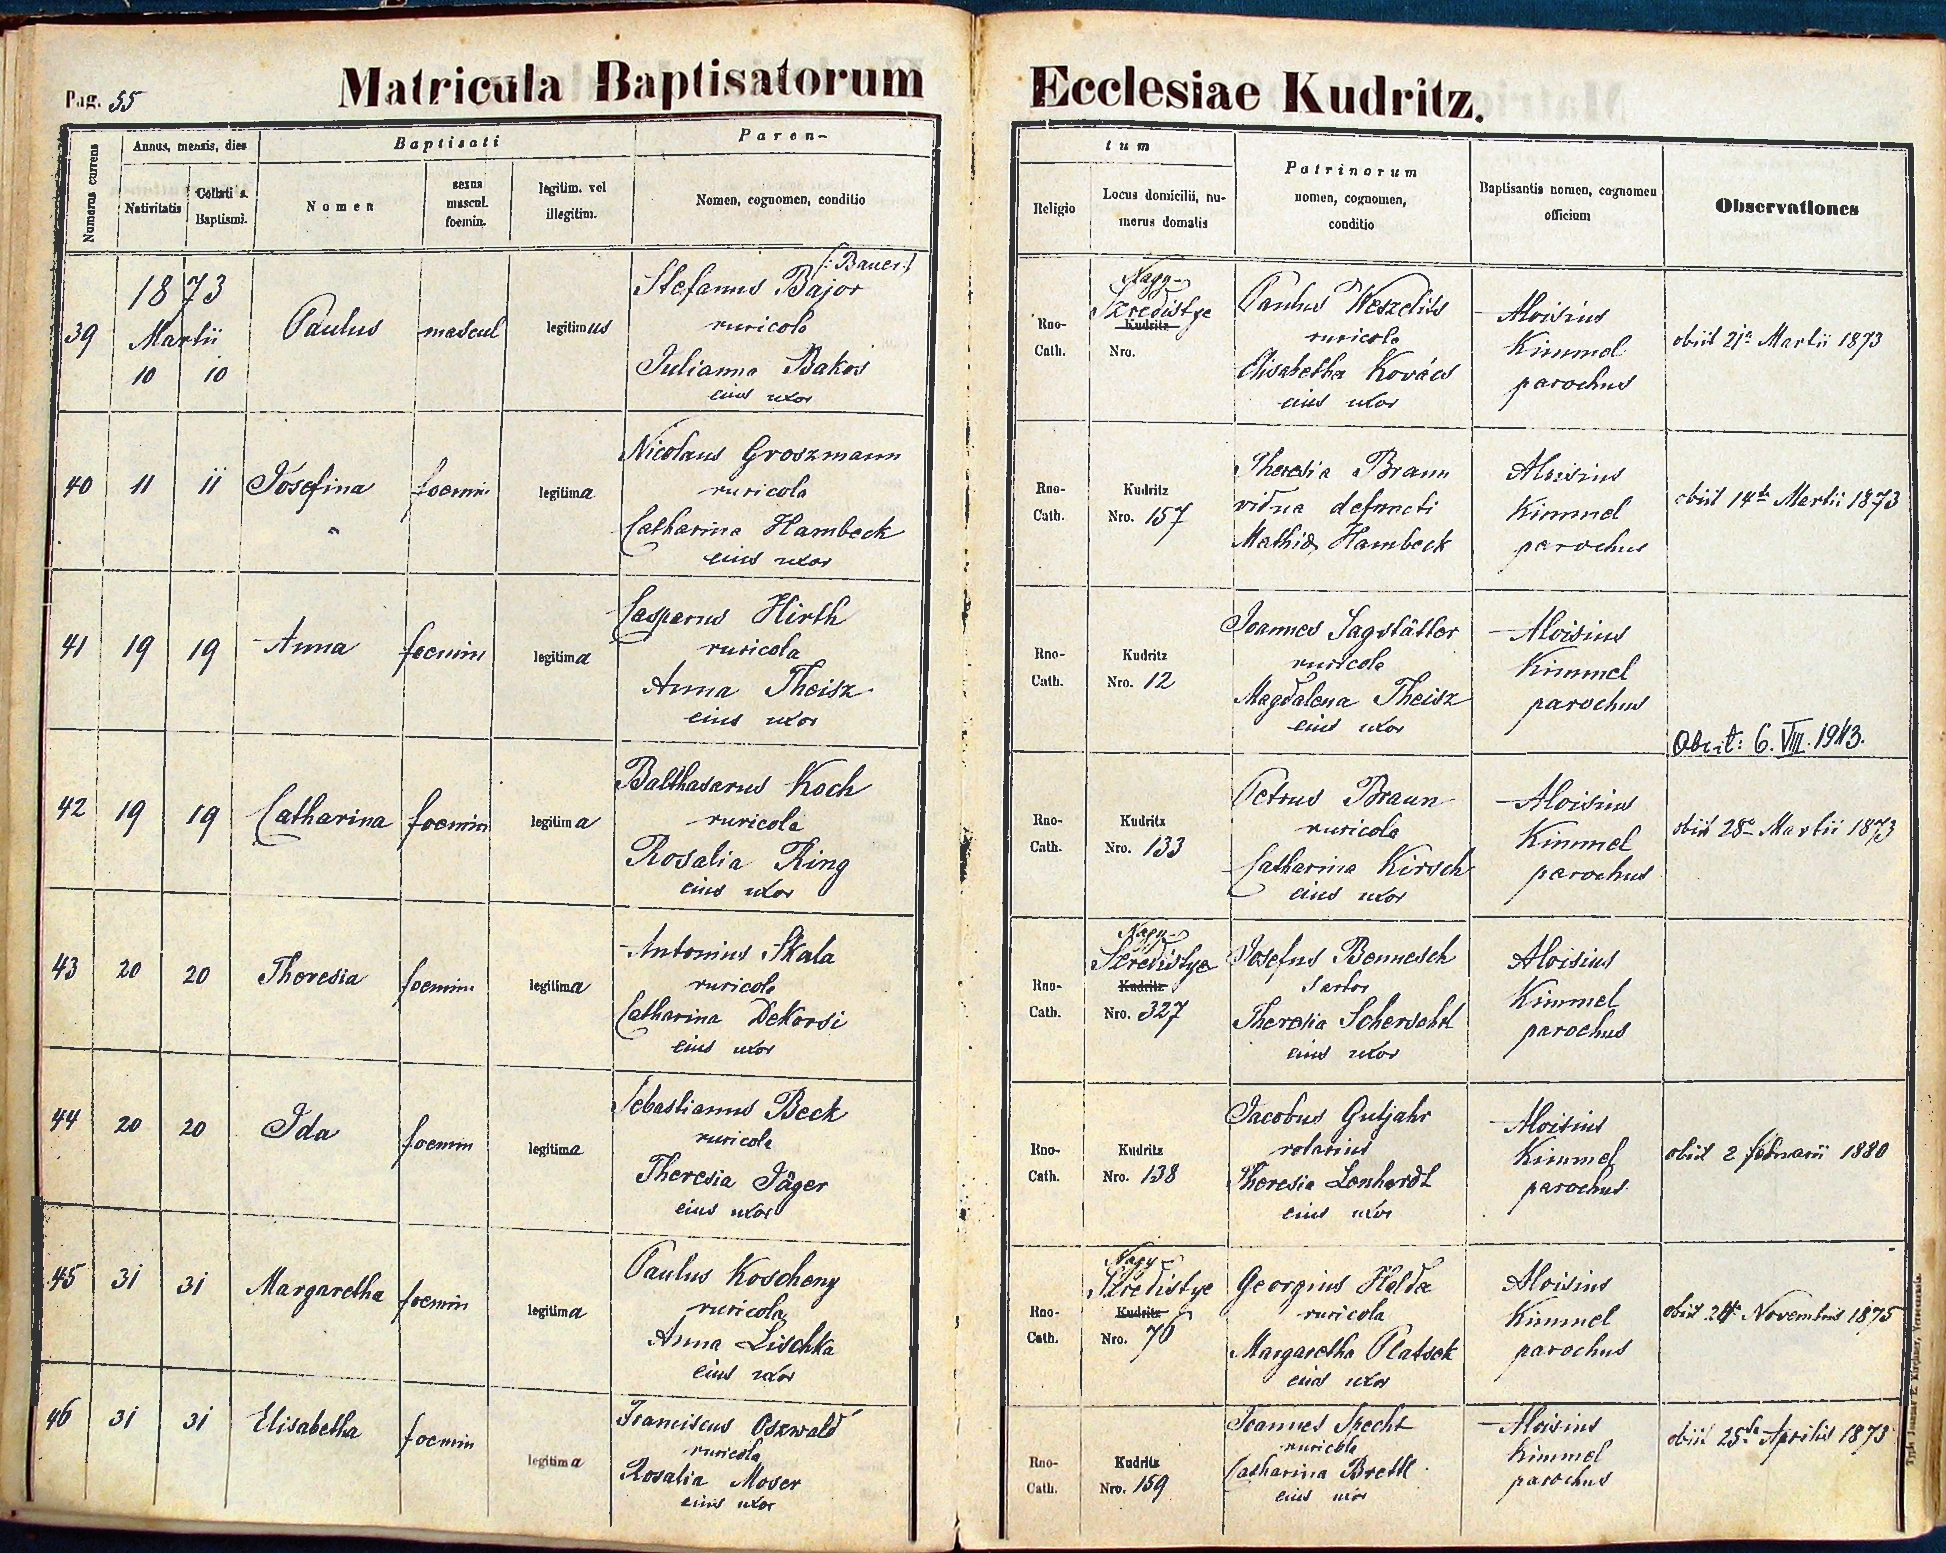 images/church_records/BIRTHS/1884-1899B/1887/055